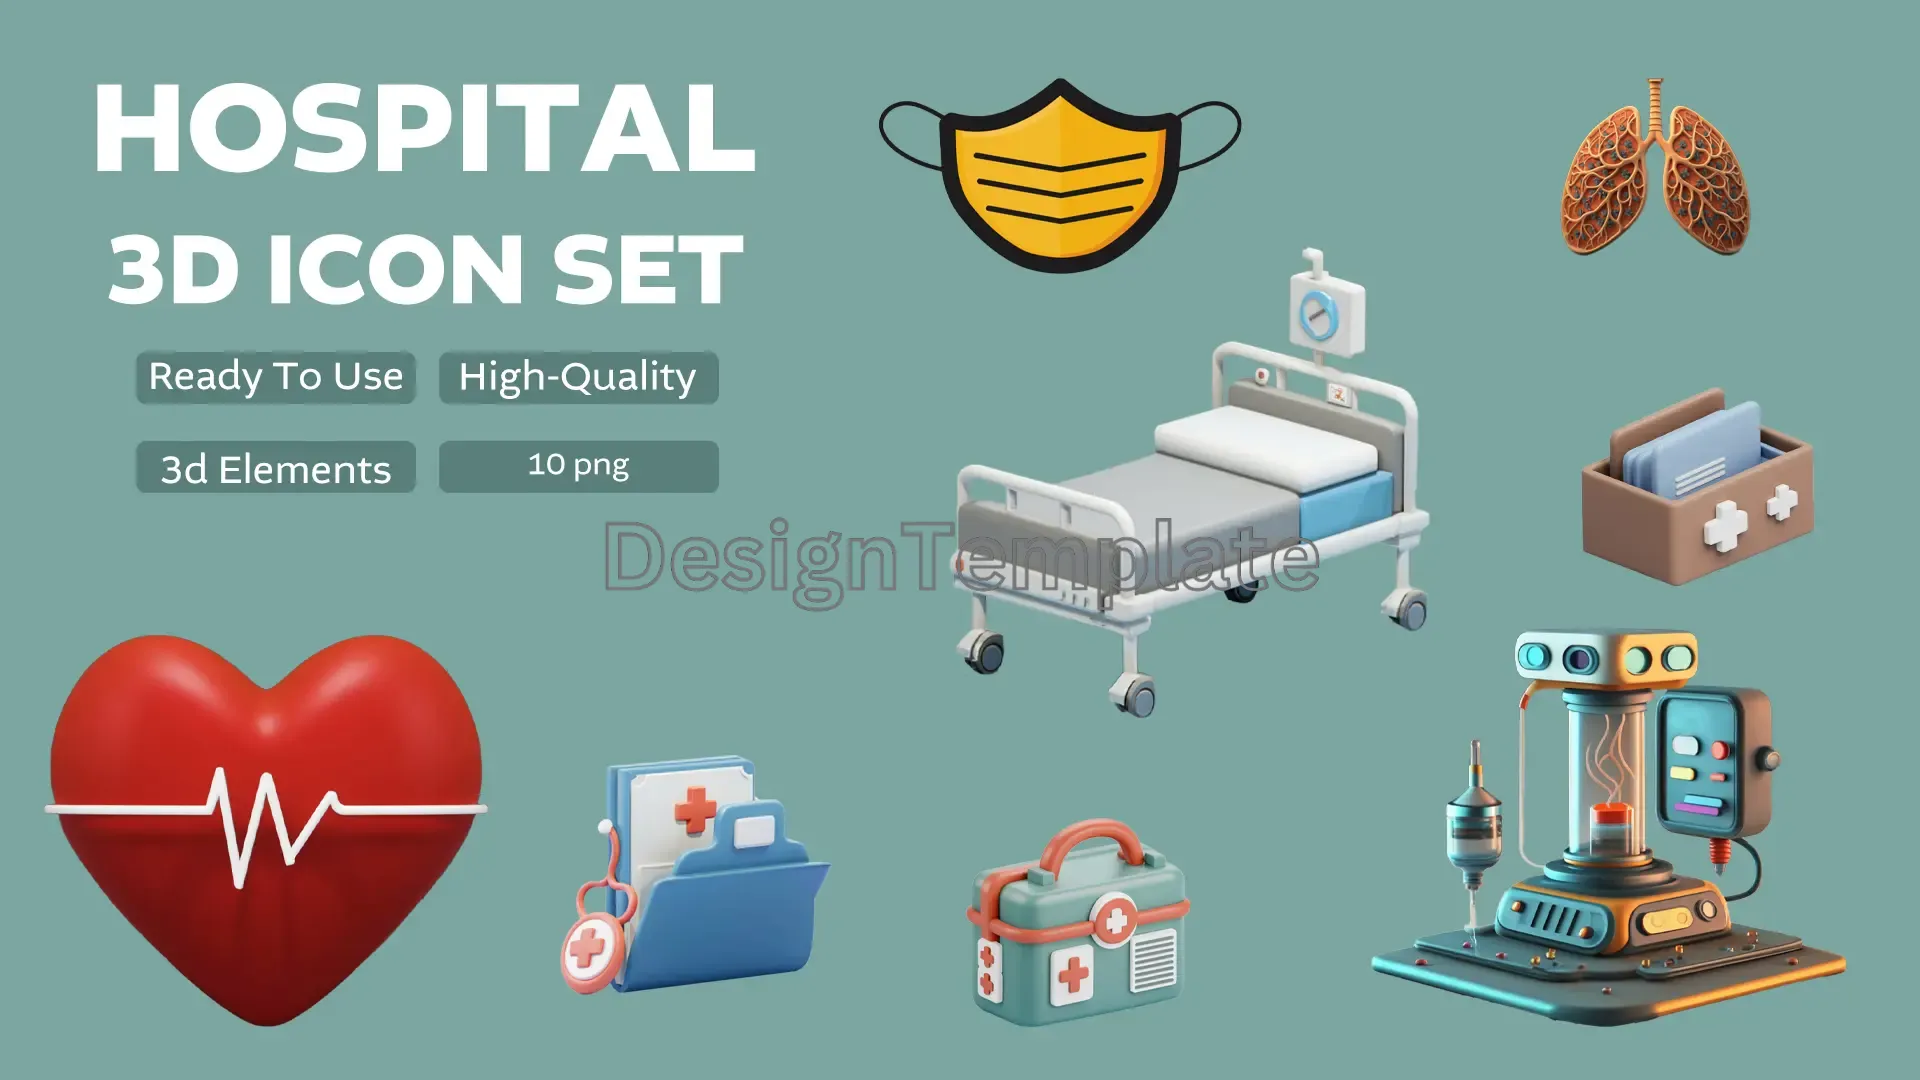 Advanced Healthcare 3D Icon Set image